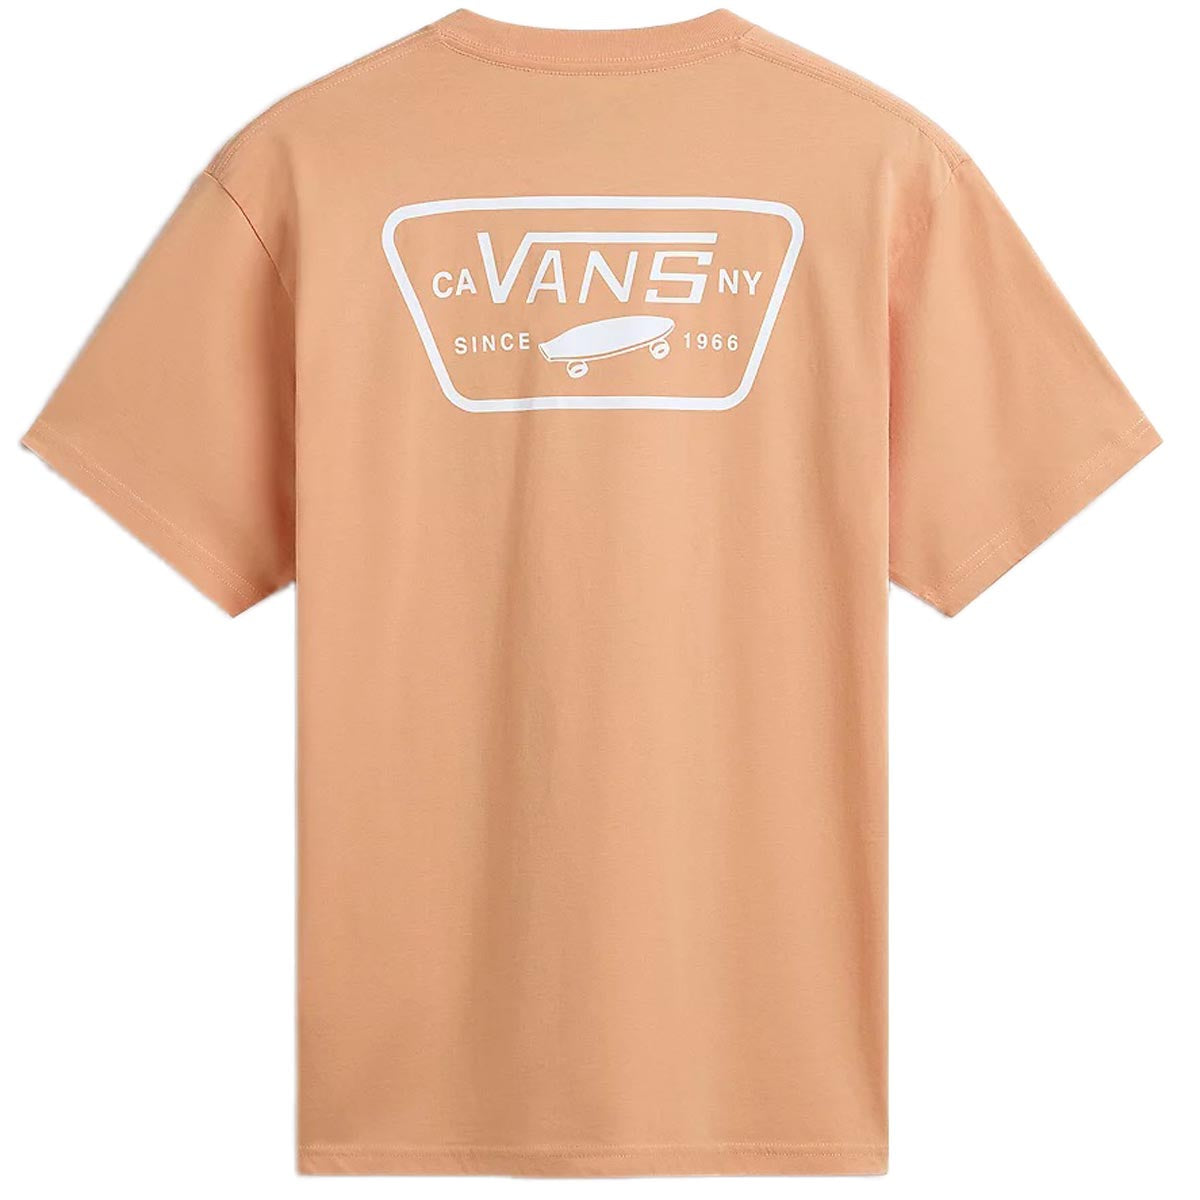 Vans Full Patch Back T-Shirt - Copper Tan/White image 1